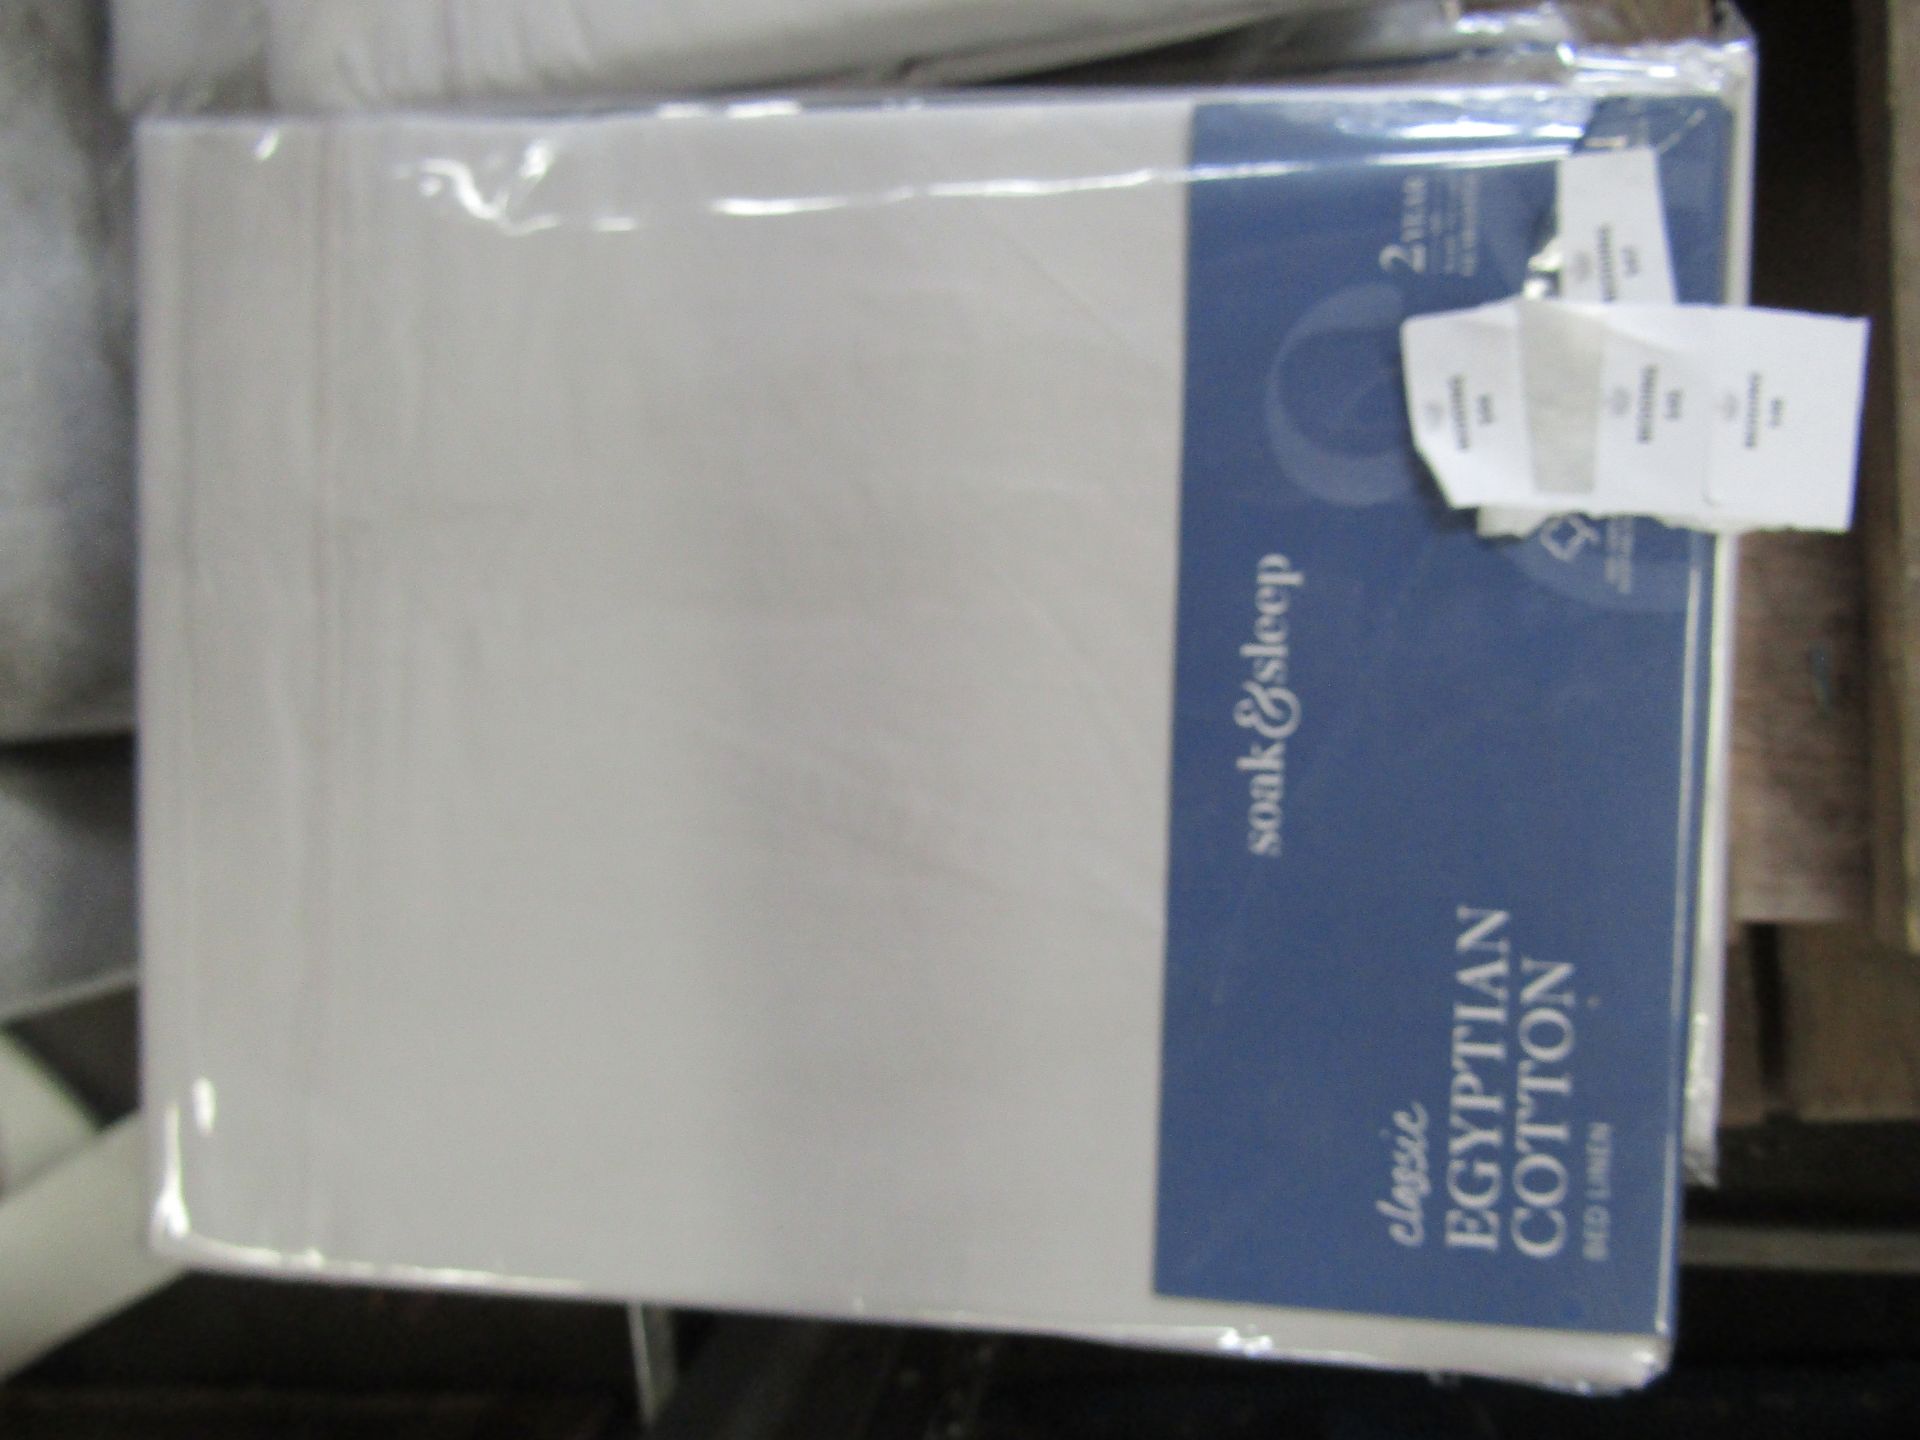 Soak & Sleep Soak & Sleep Silver Grey 200TC Egyptian Cotton Single Duvet Cover RRP 22 - Image 2 of 2